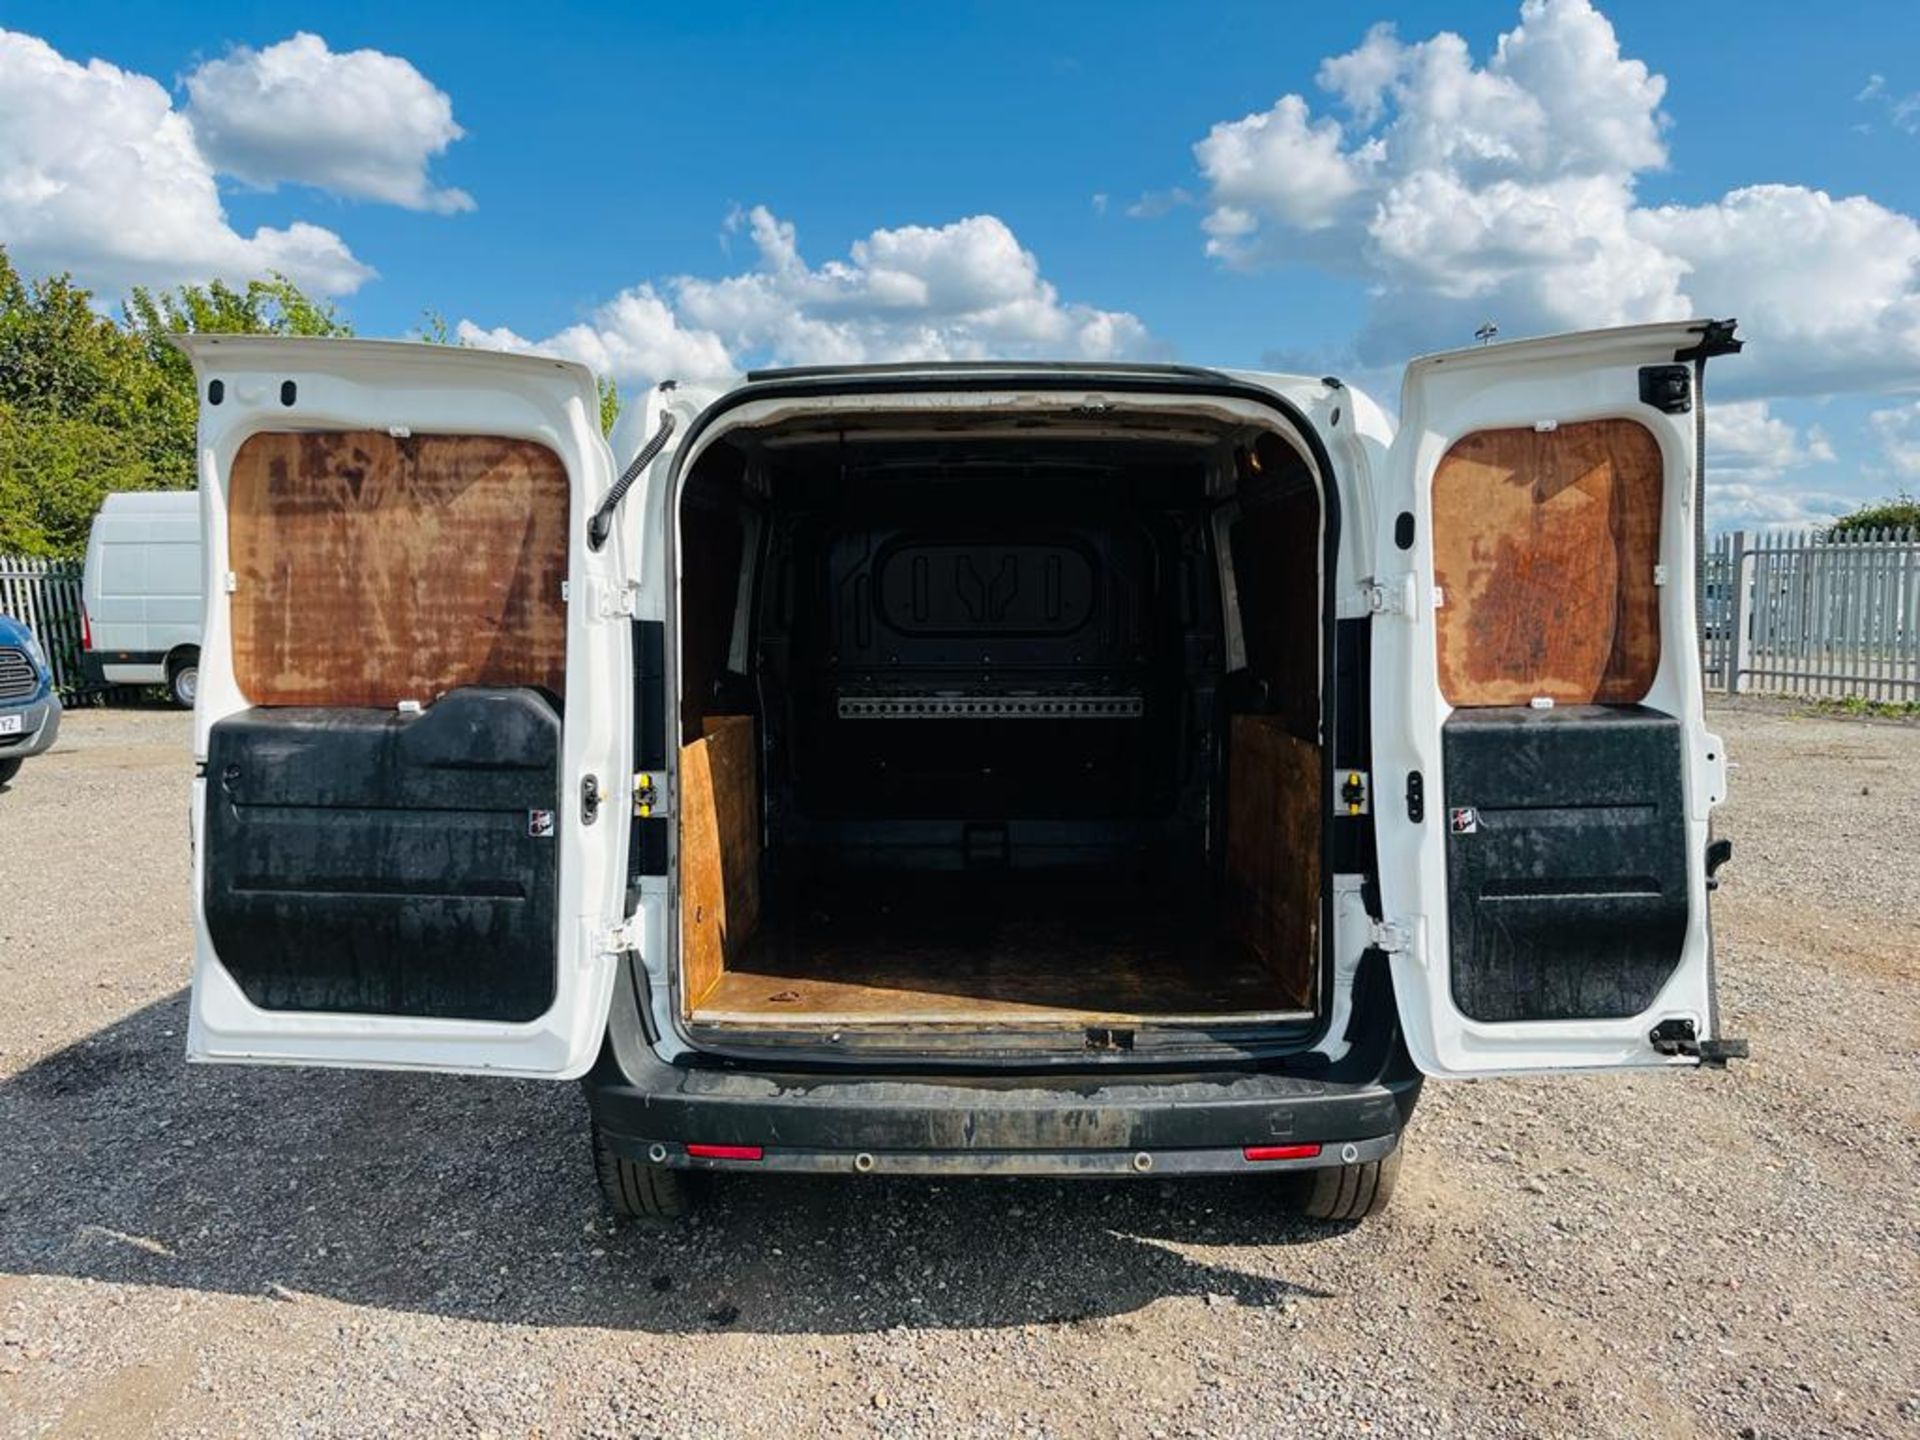 Fiat Doblo Cargo 1.6 MultiJet Tecnico MAXI 2019 '19 Reg' Only 85,456 Miles - ULEZ Compliant - Image 8 of 25